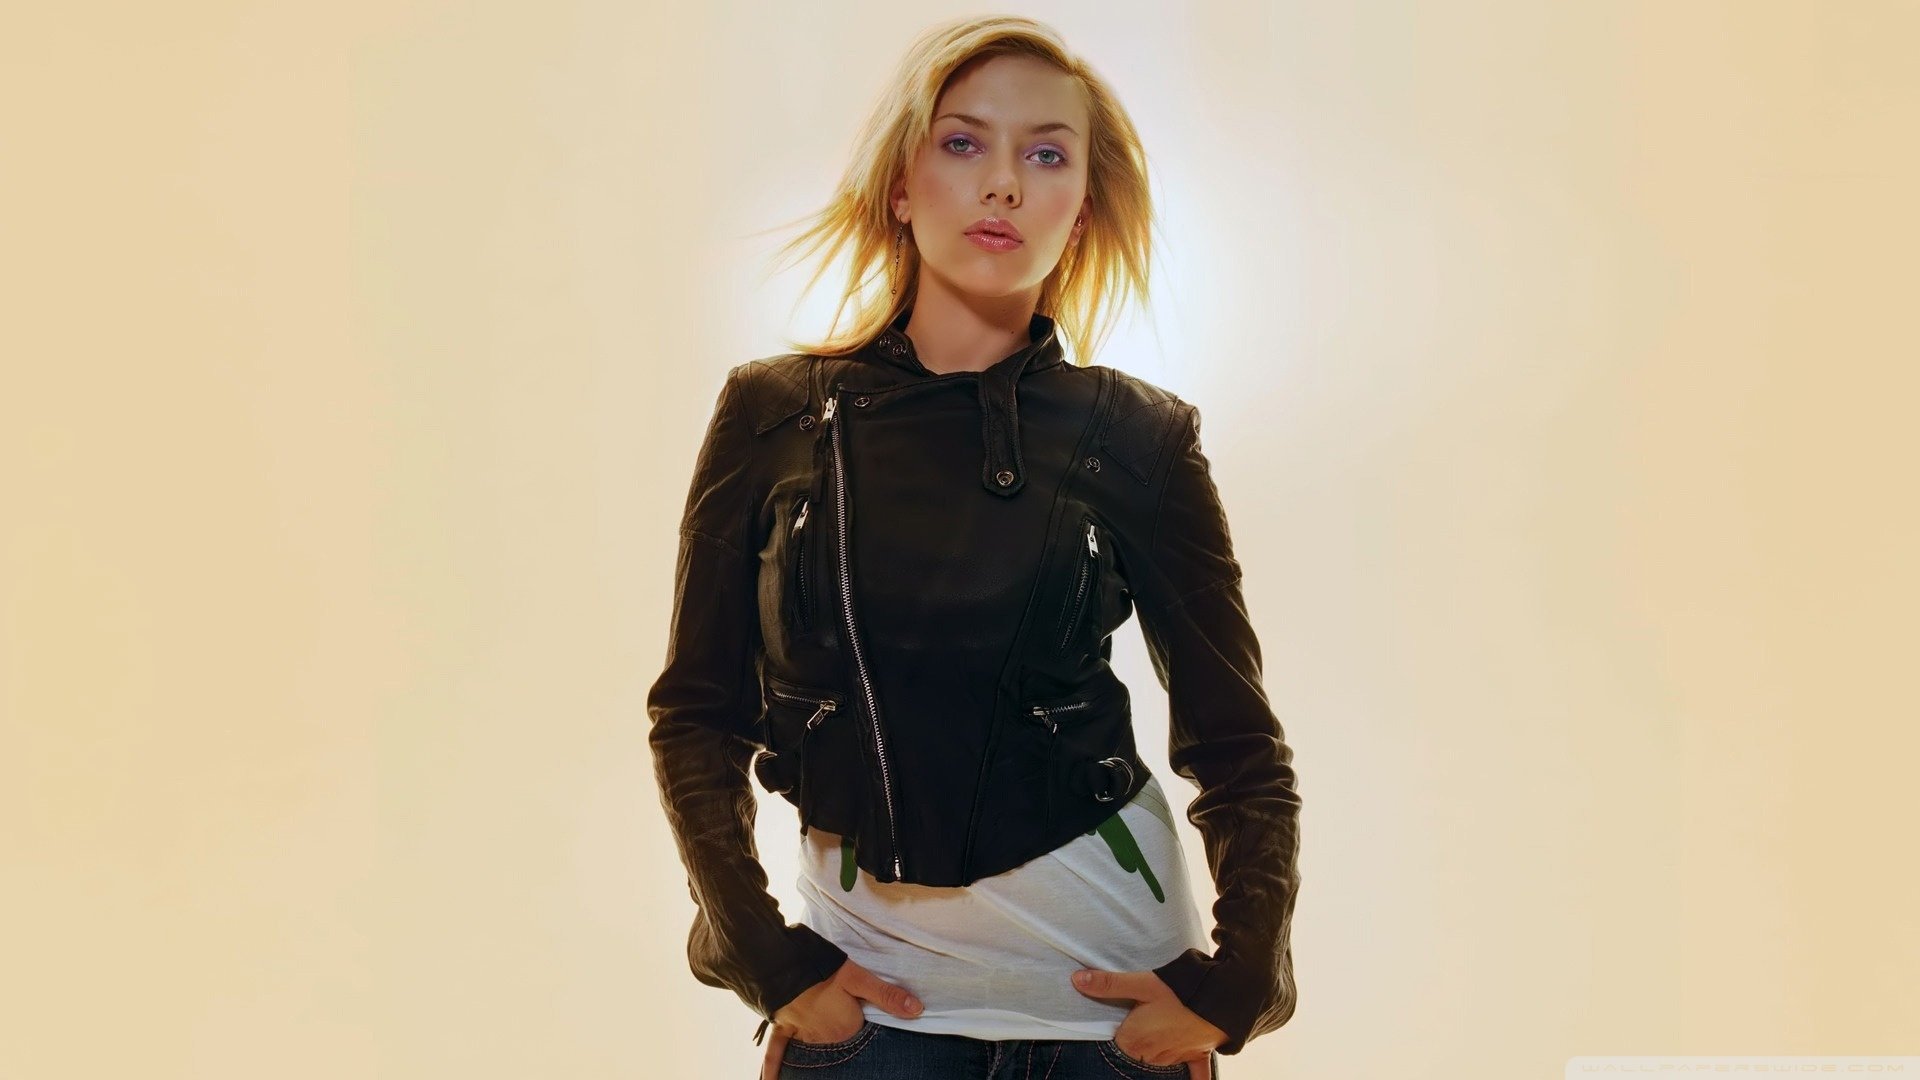 Celebrity Scarlett Johansson Image